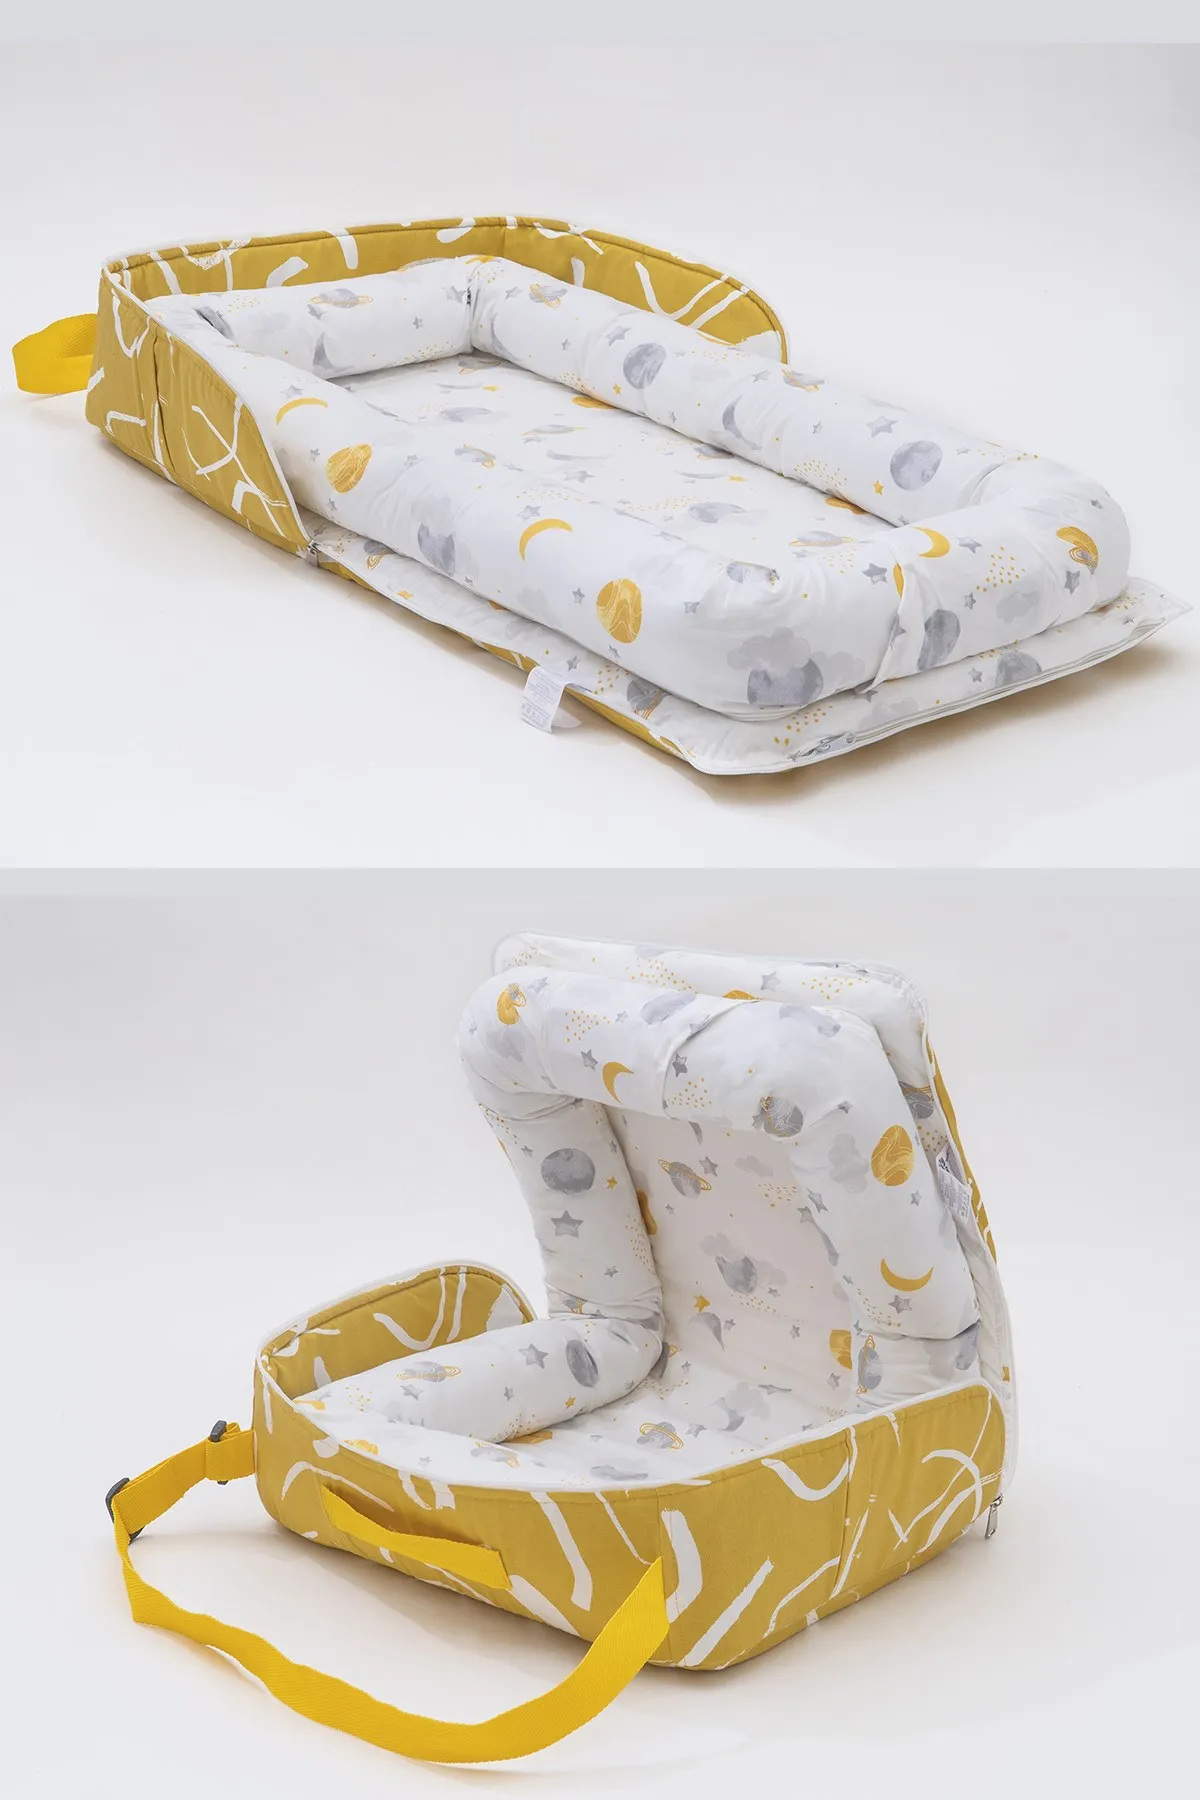 Jaju Baby 3n1 Reflux mattress, Babynest, Mother Bag Yellow Space Pattern Lux Baby Nest